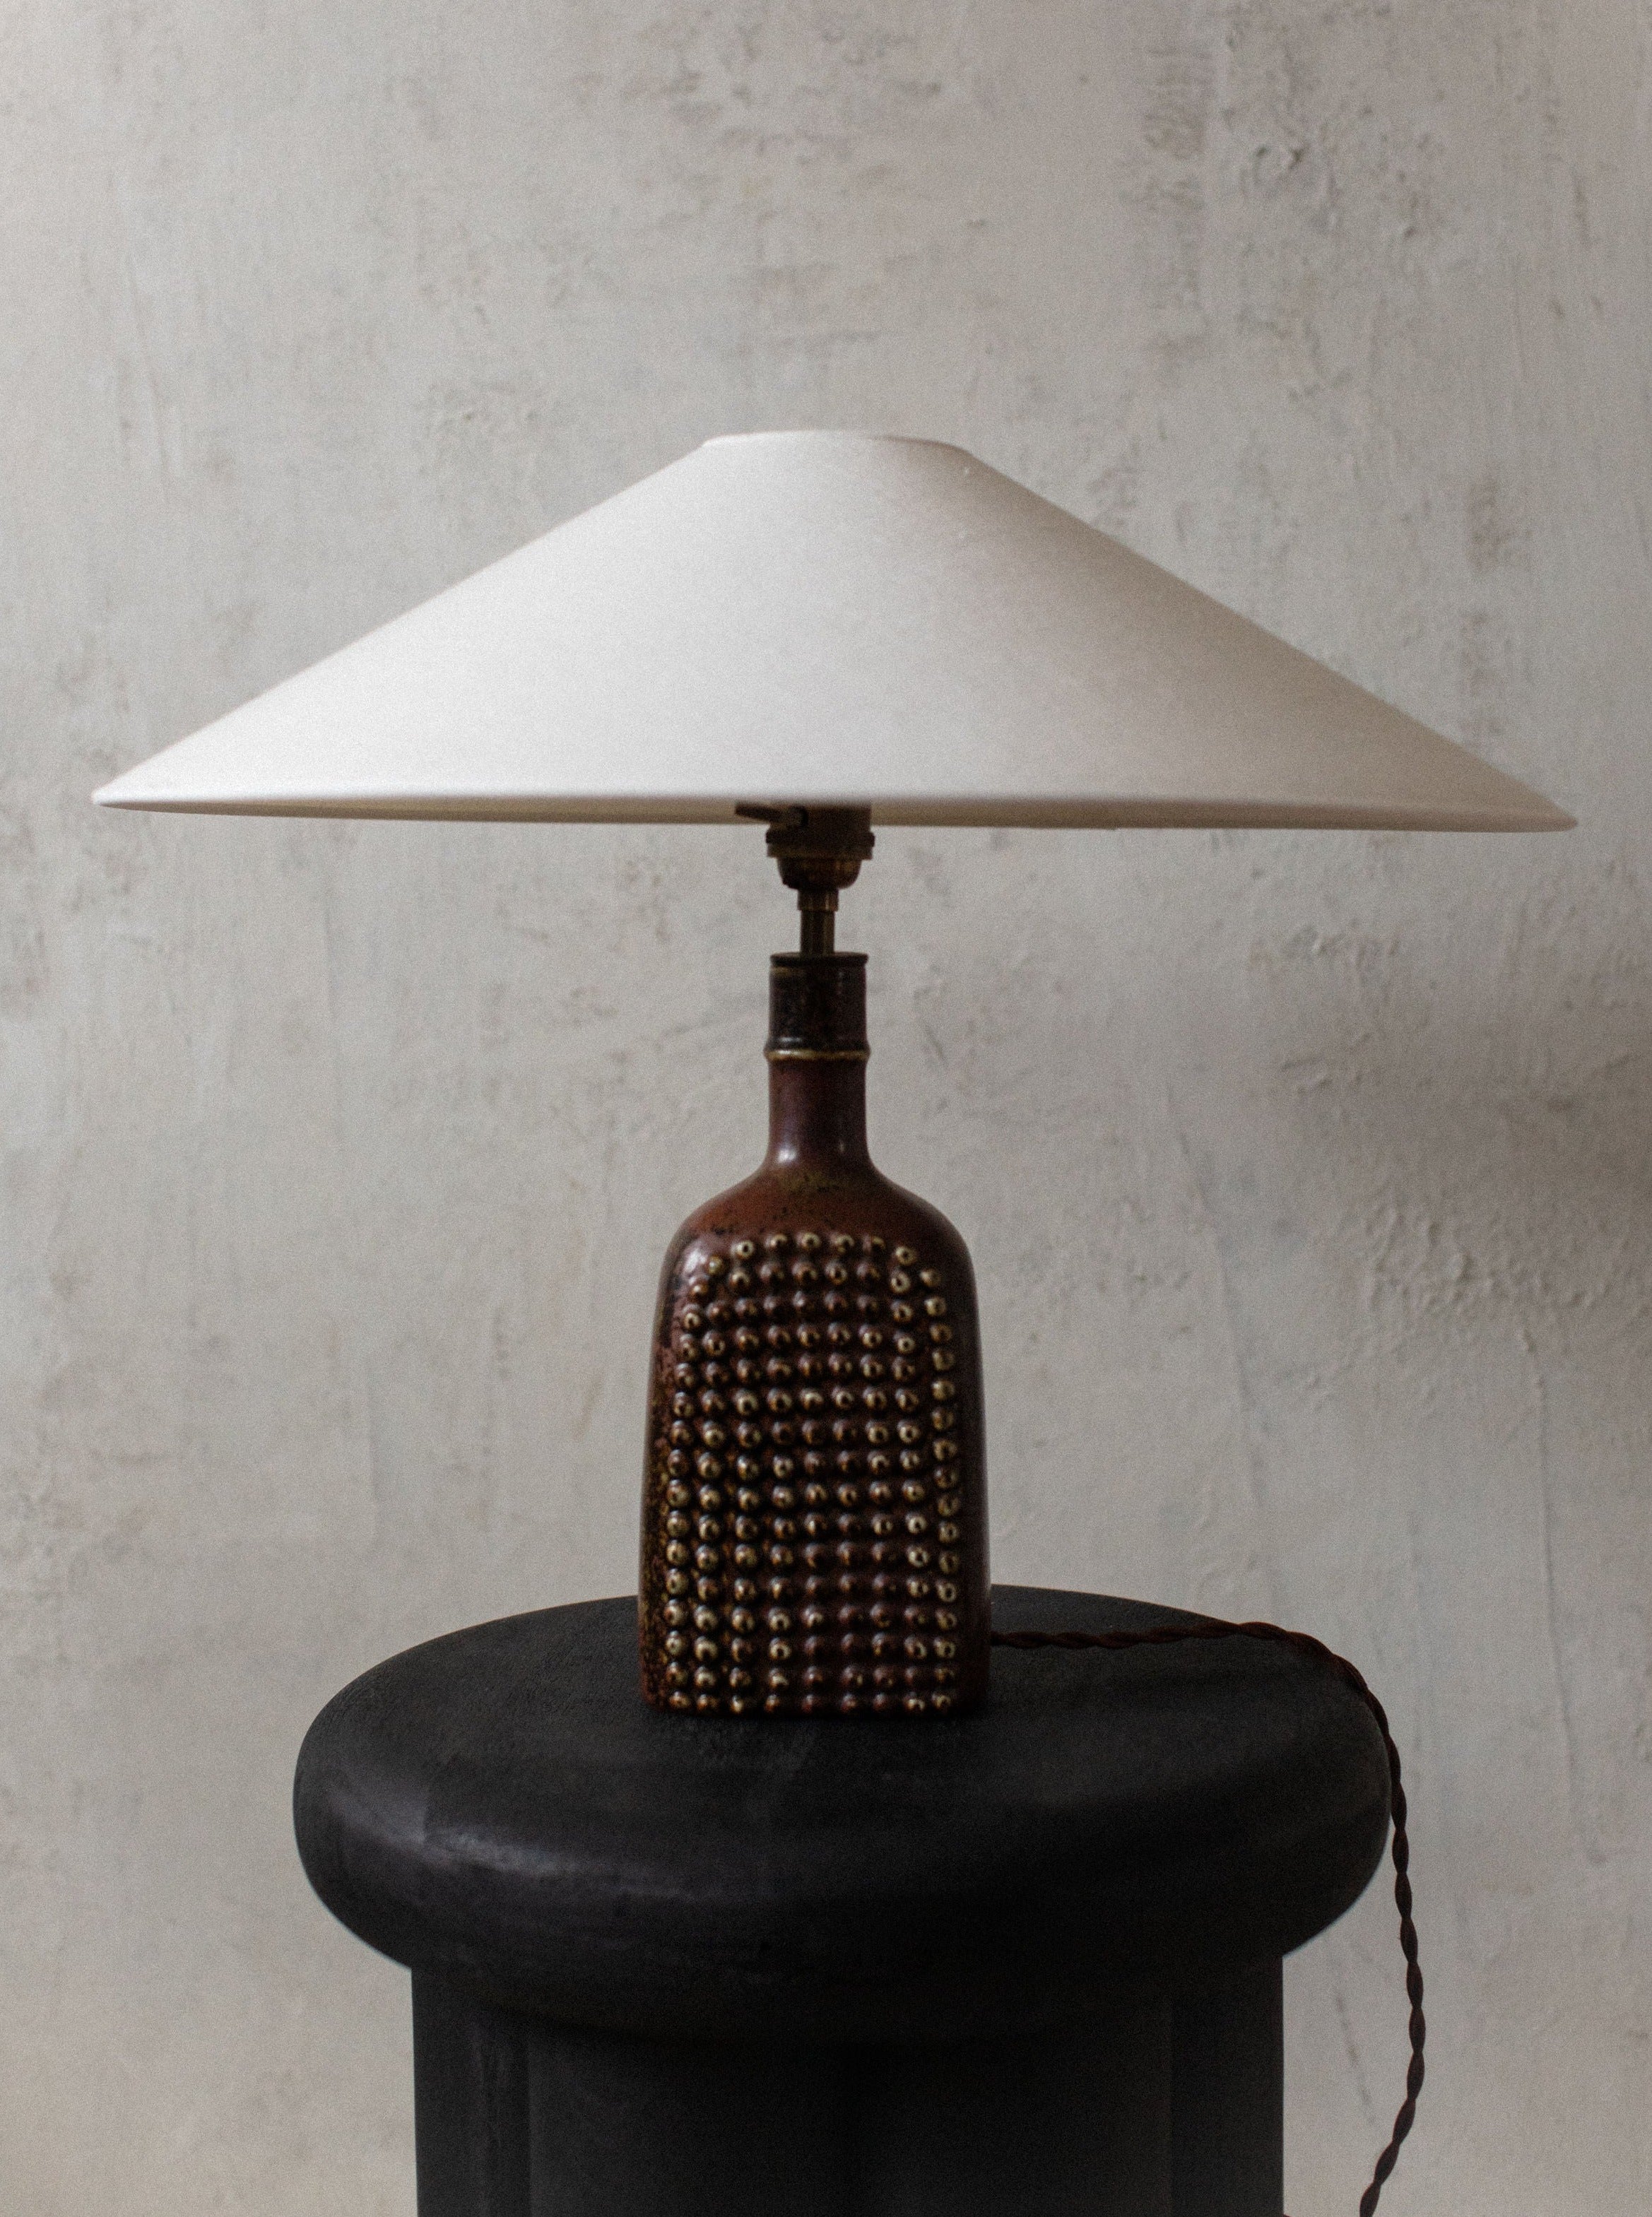 Vintage Stig Lindberg 1950's ceramic table lamp with white shade